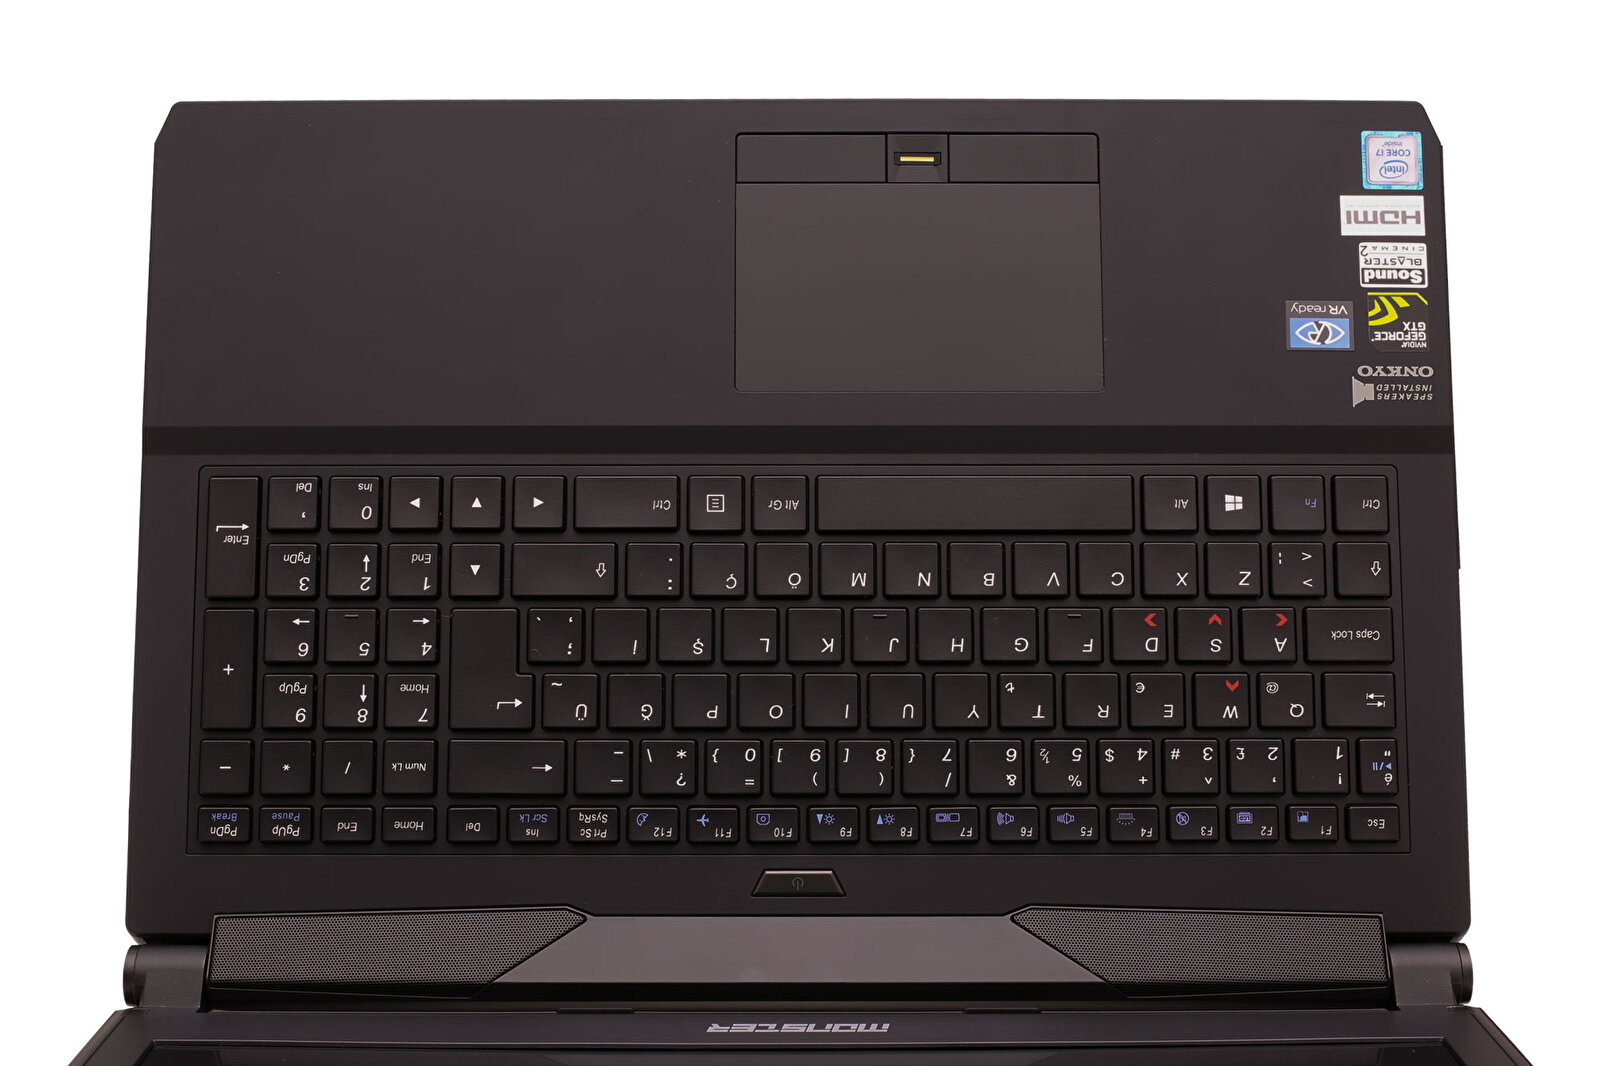 Abra A5 V7.1.1 15.6" Gaming Laptop 15955